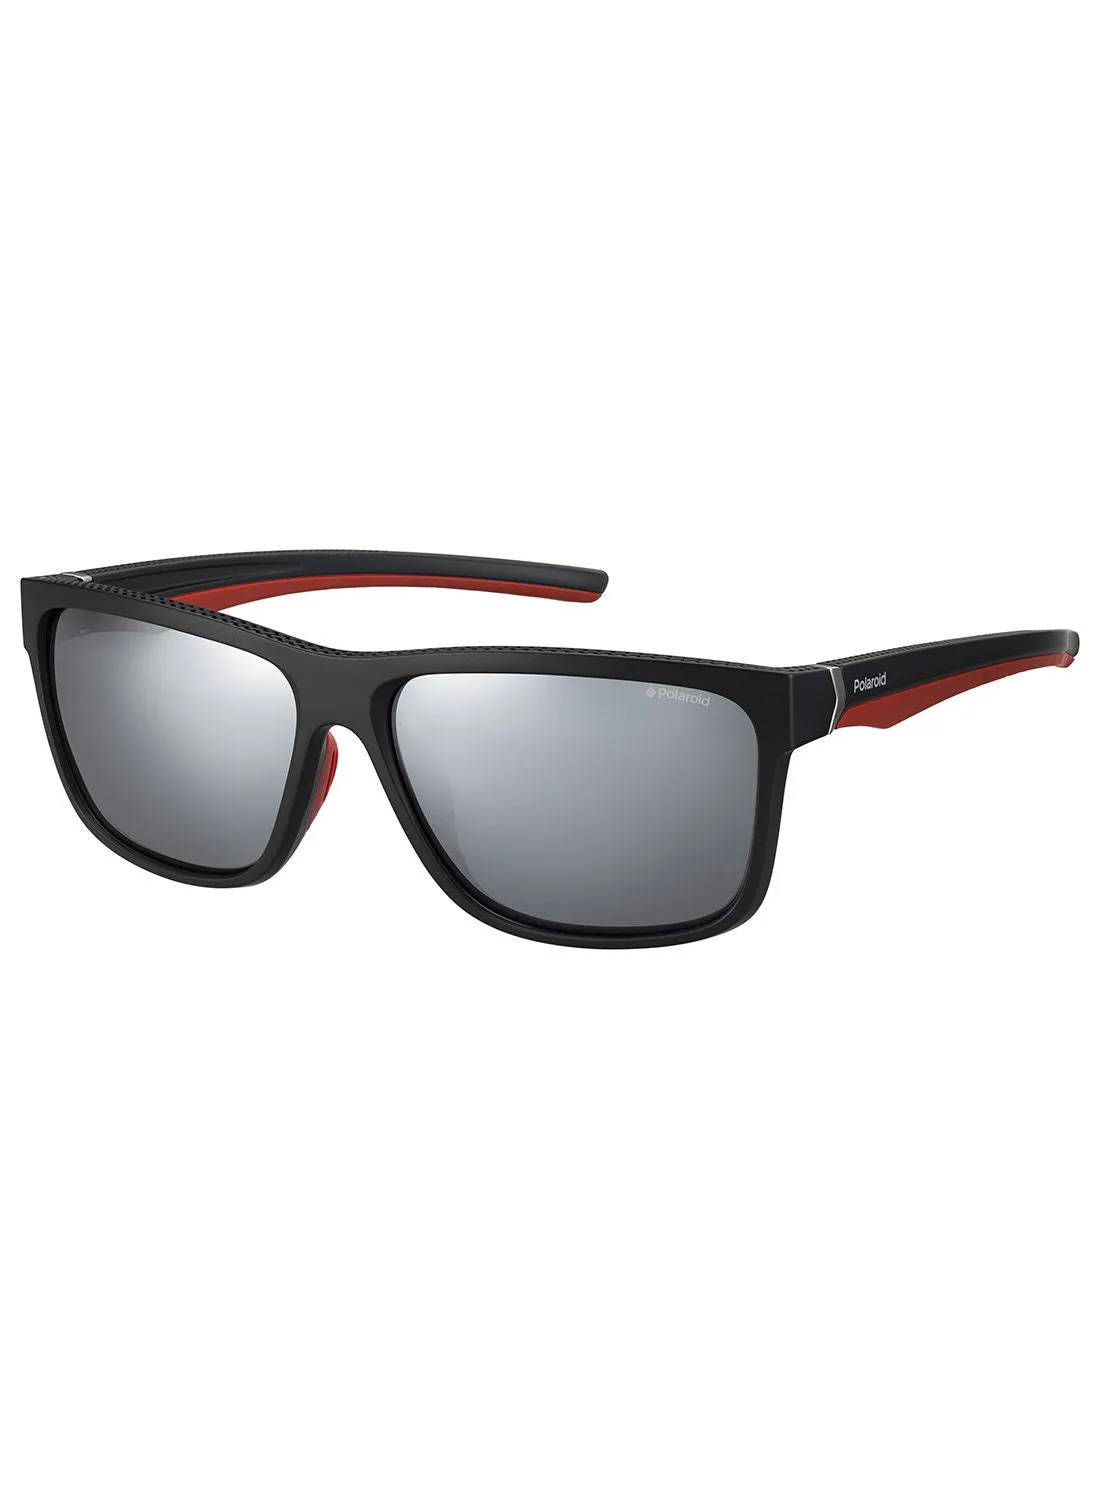 بولارويد Polaroid Polarized Rectangular Eyewear Sunglasses PLD 7014 / S BLACK RED 59